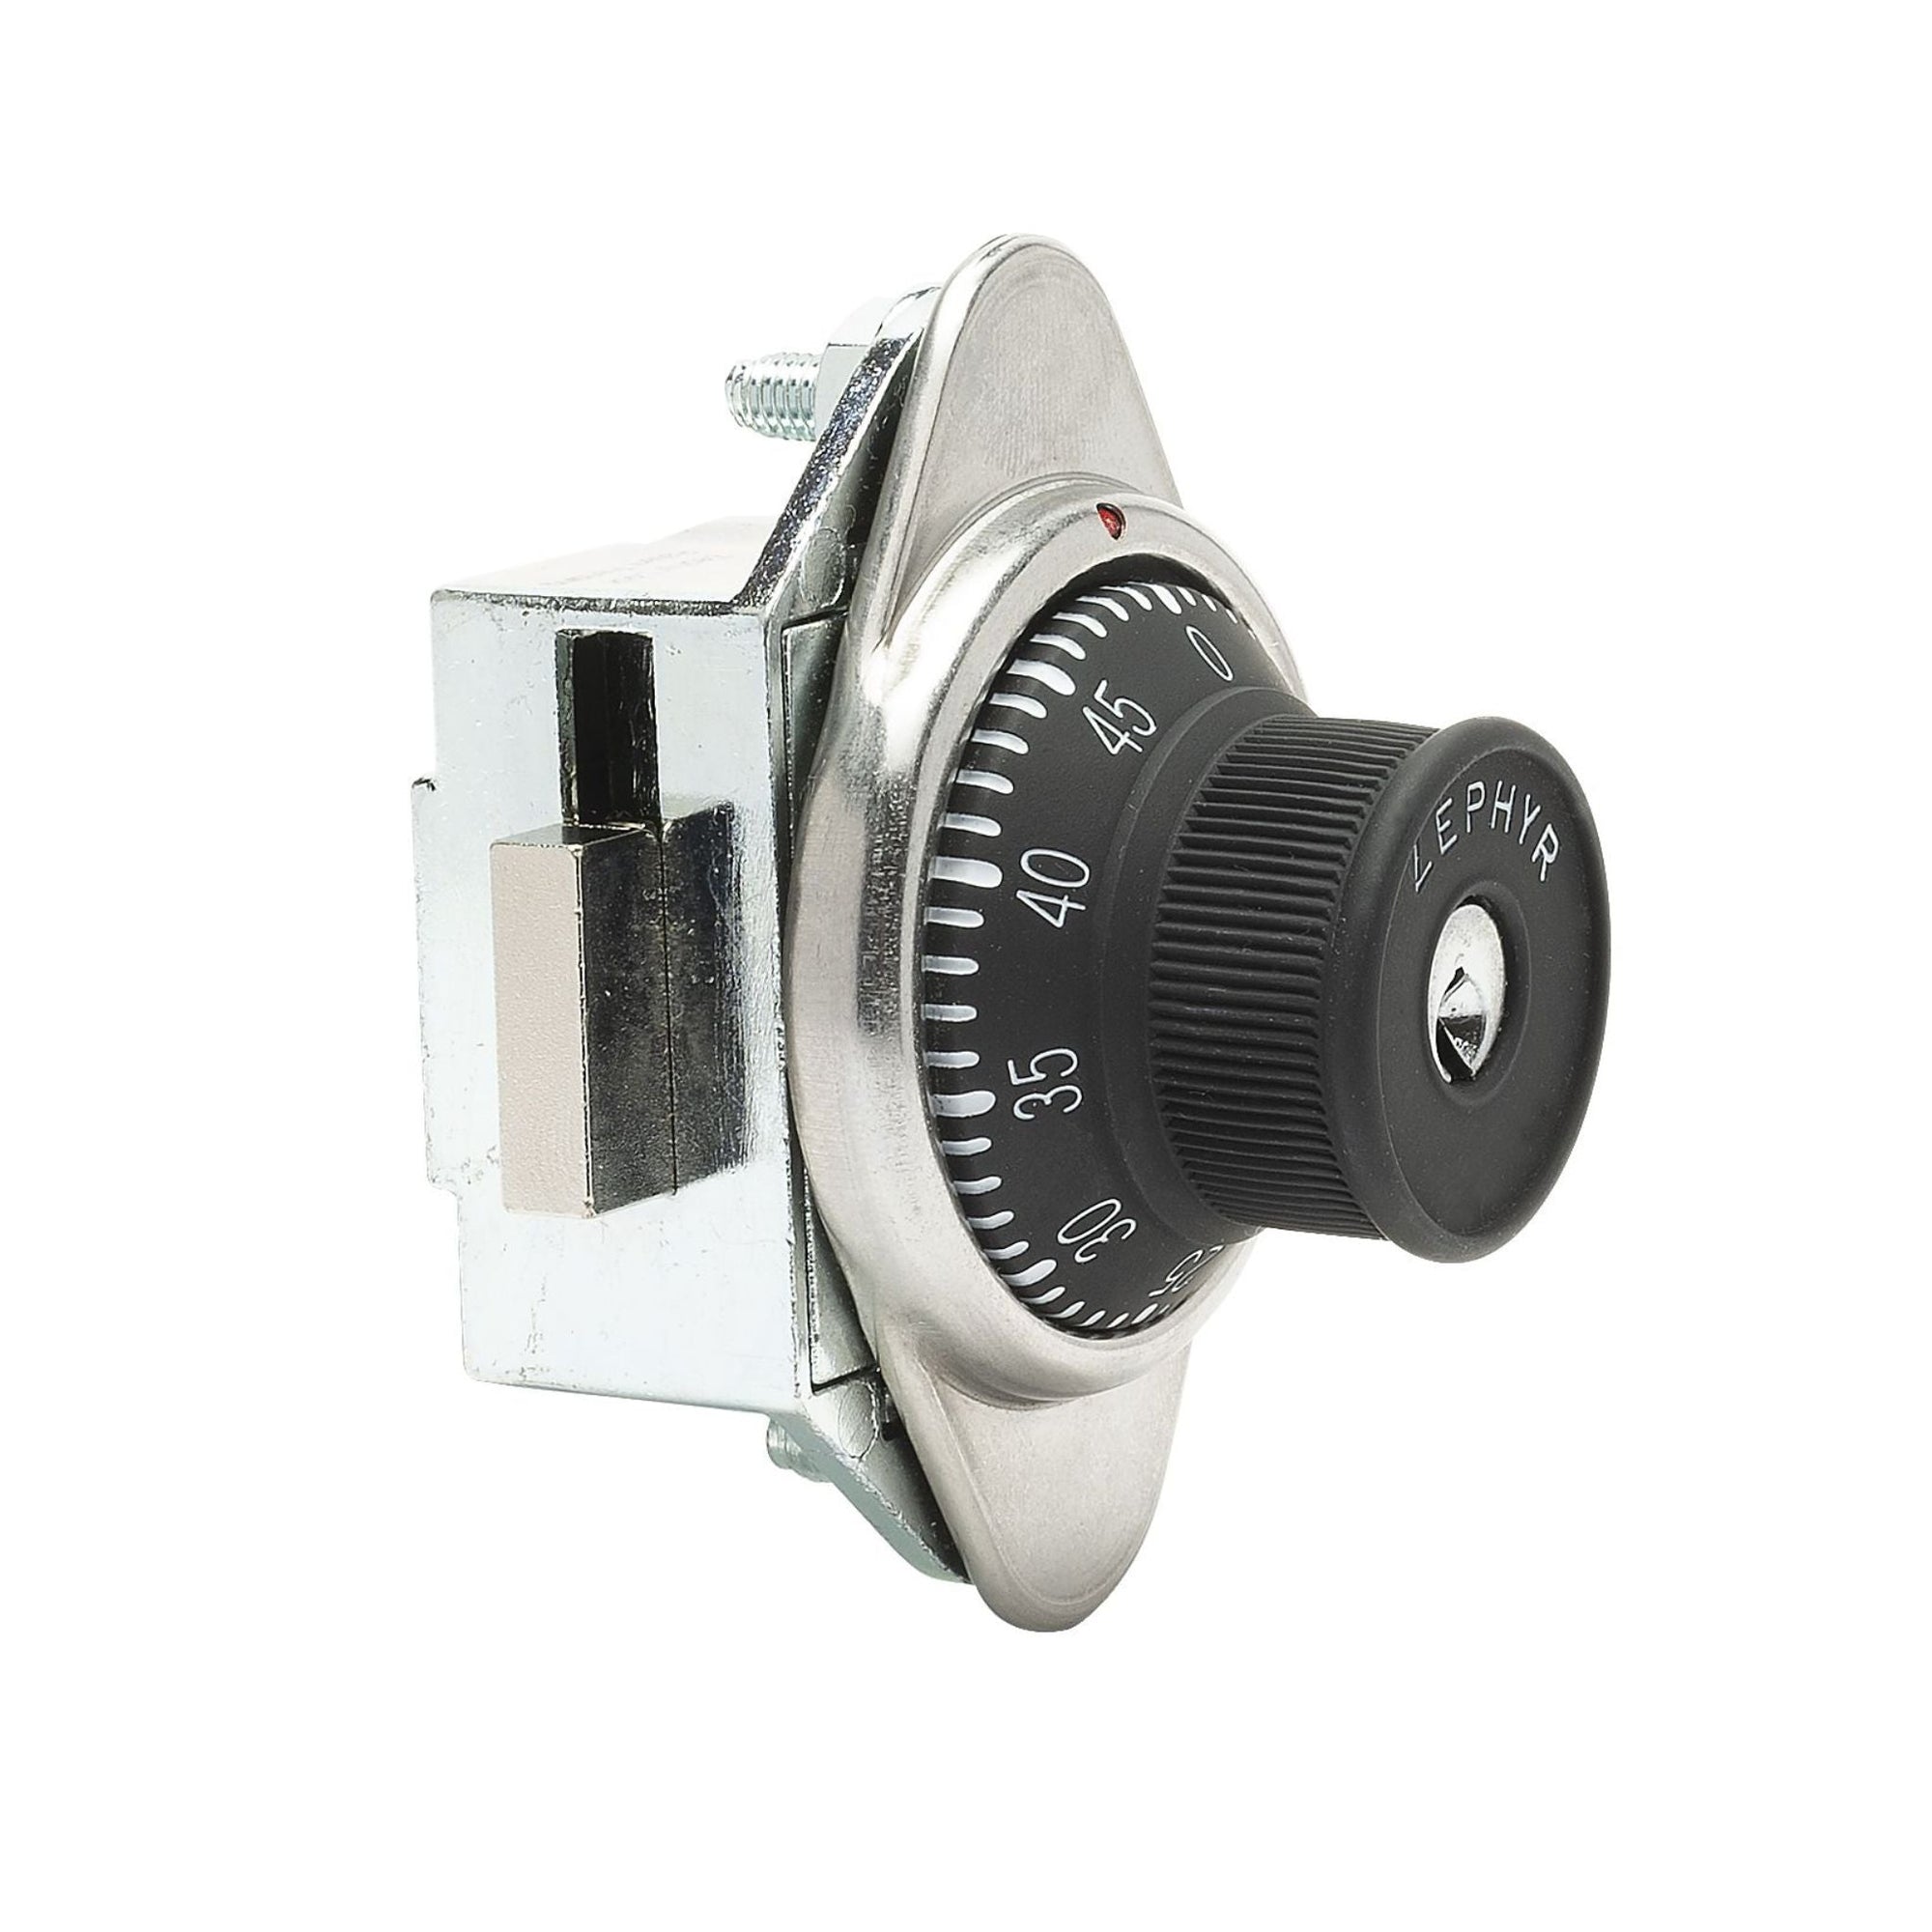 Zephyr Lock 1930 RH Built-In Combination Locker Locks Fit Gravity Style and Multi Point Lockers - The Lock Source